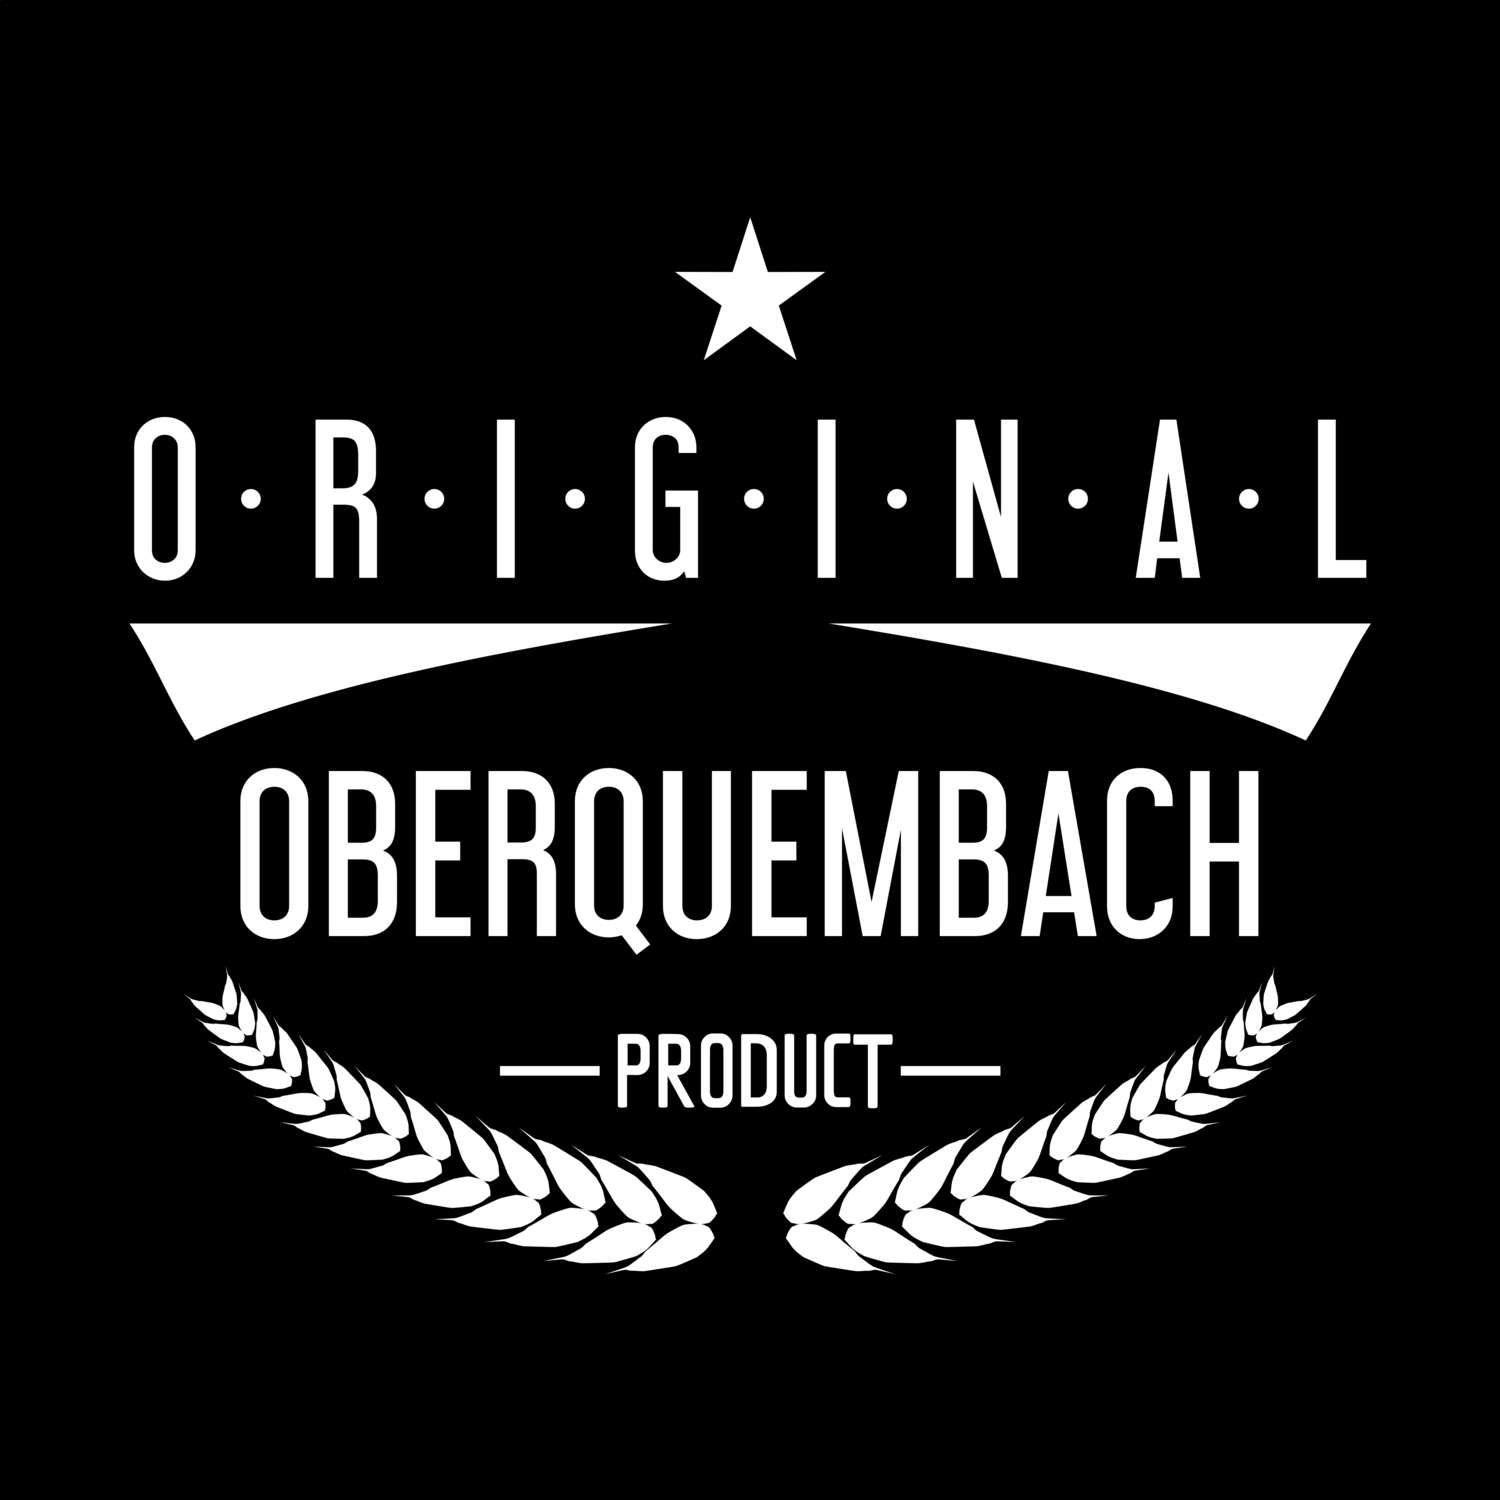 Oberquembach T-Shirt »Original Product«